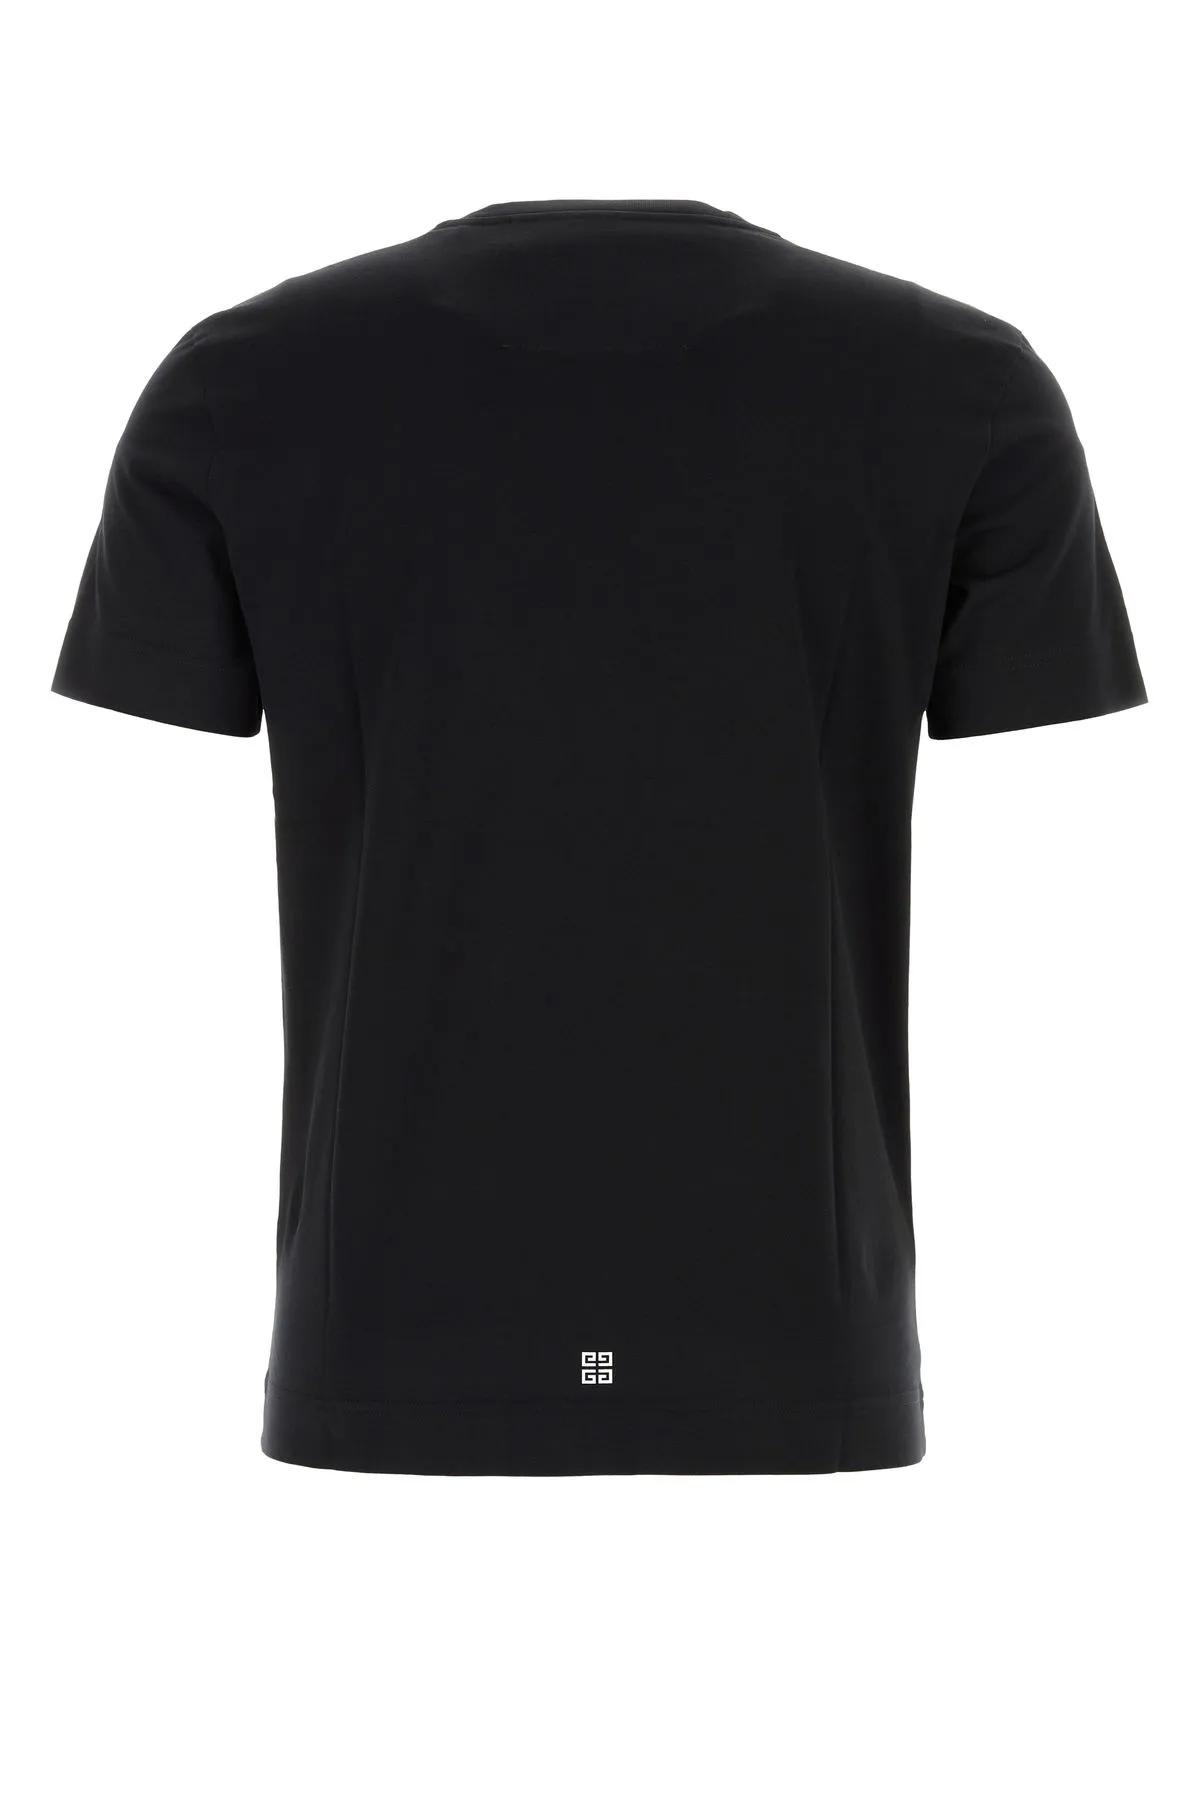 Shop Givenchy Black Cotton T-shirt